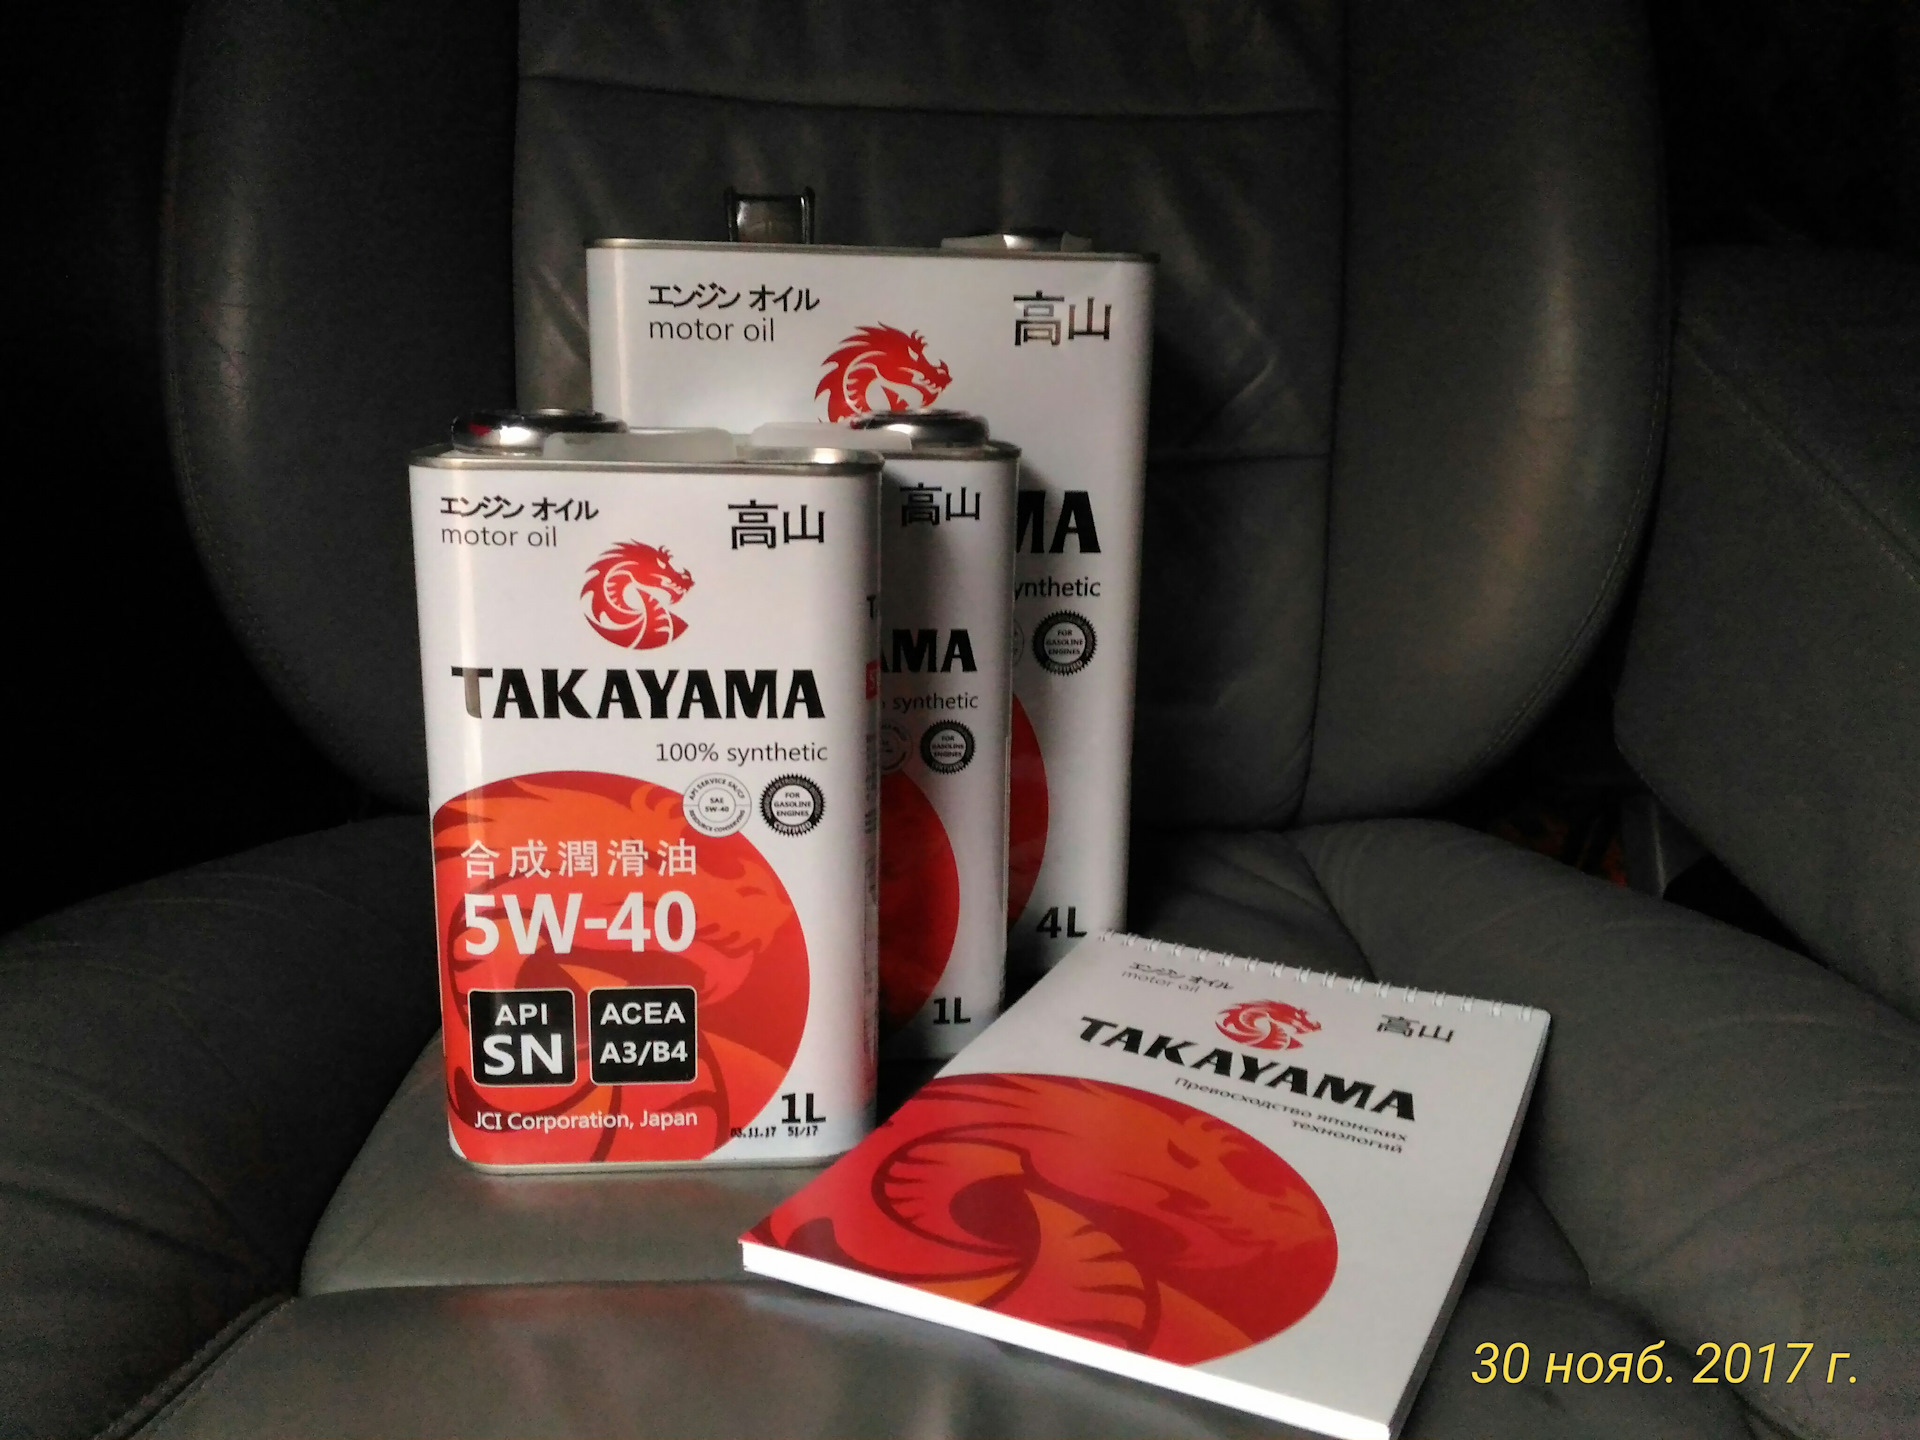 Моторное масло takayama 5w 40. Масло Такаяма 5w40. Масло Токояма 5w-40. Масло Токояма 5w-30. Takayama SAE gf-5 API SN 5w-40 4л.